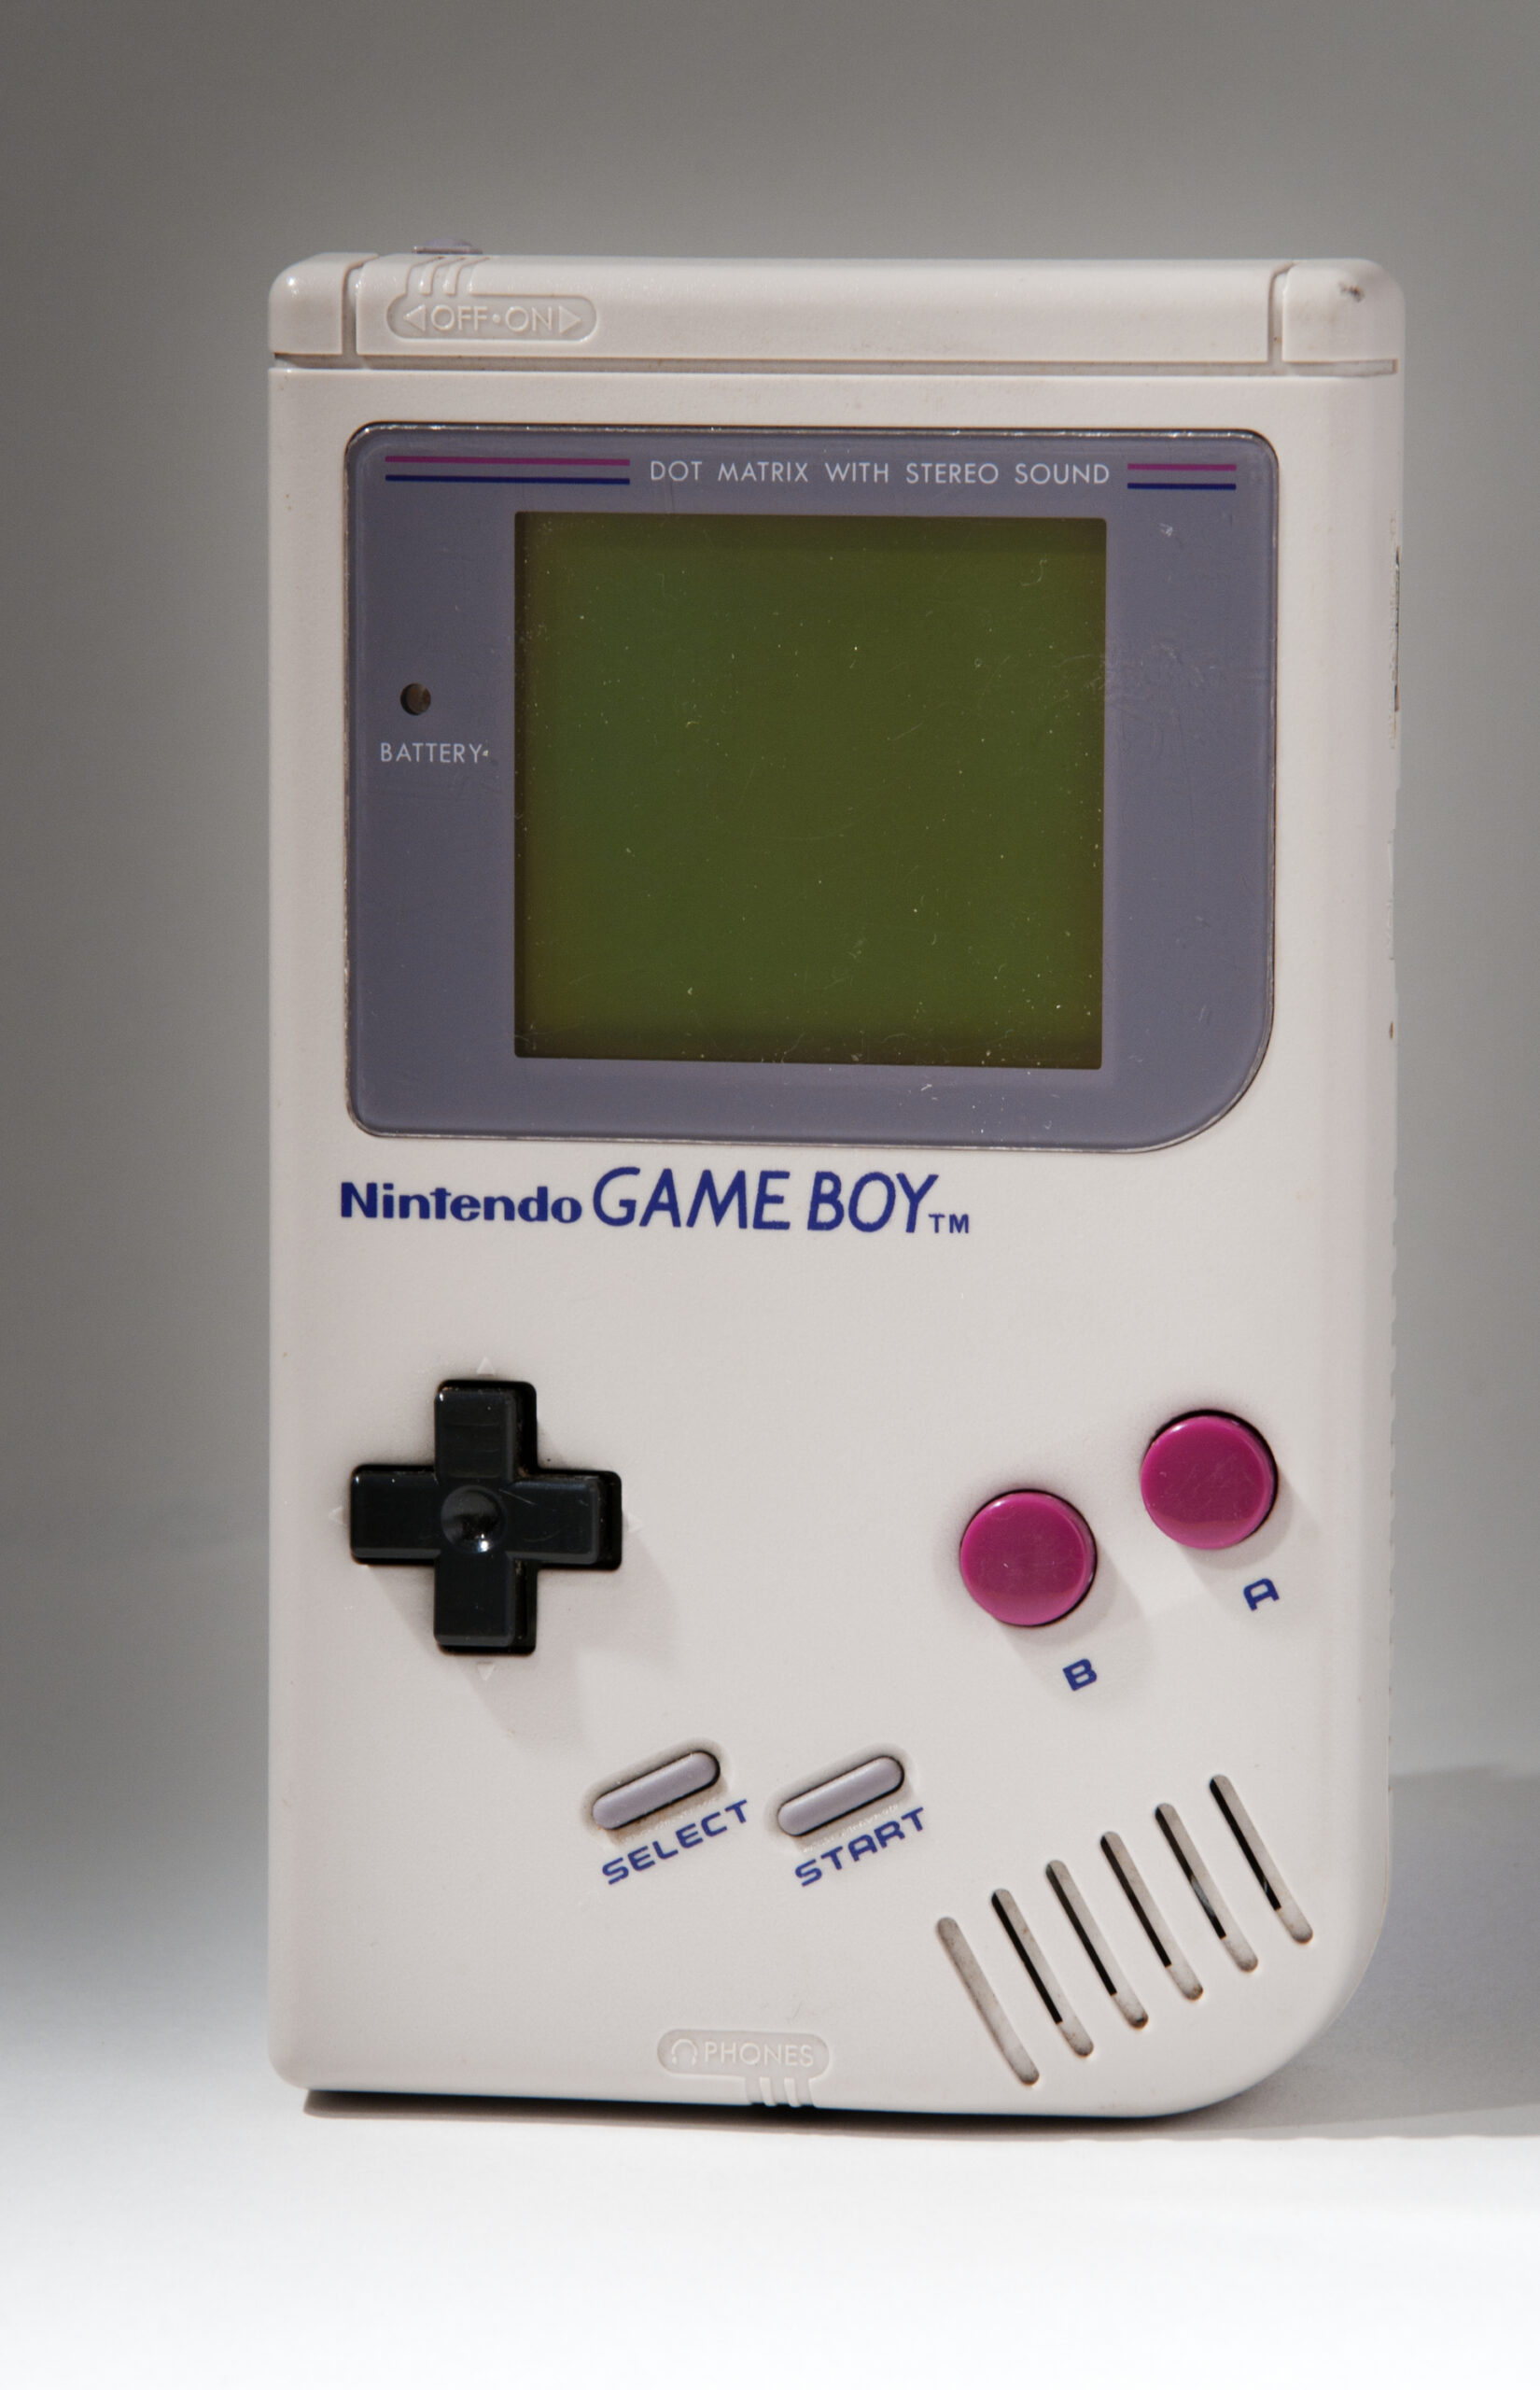 Nintendo "Game Boy" hand-held games console